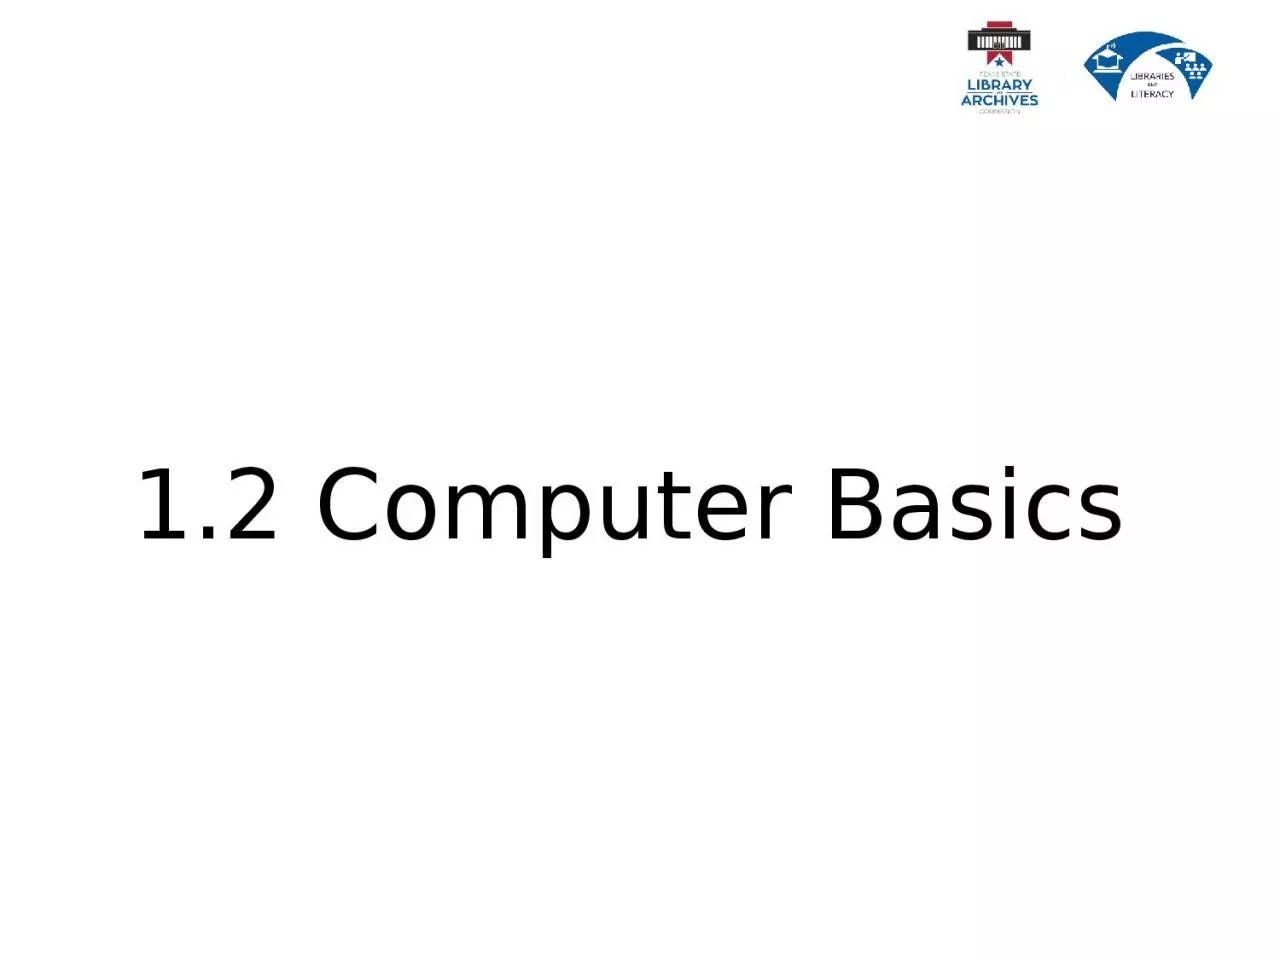 1.2  Computer Basics Learning Goals